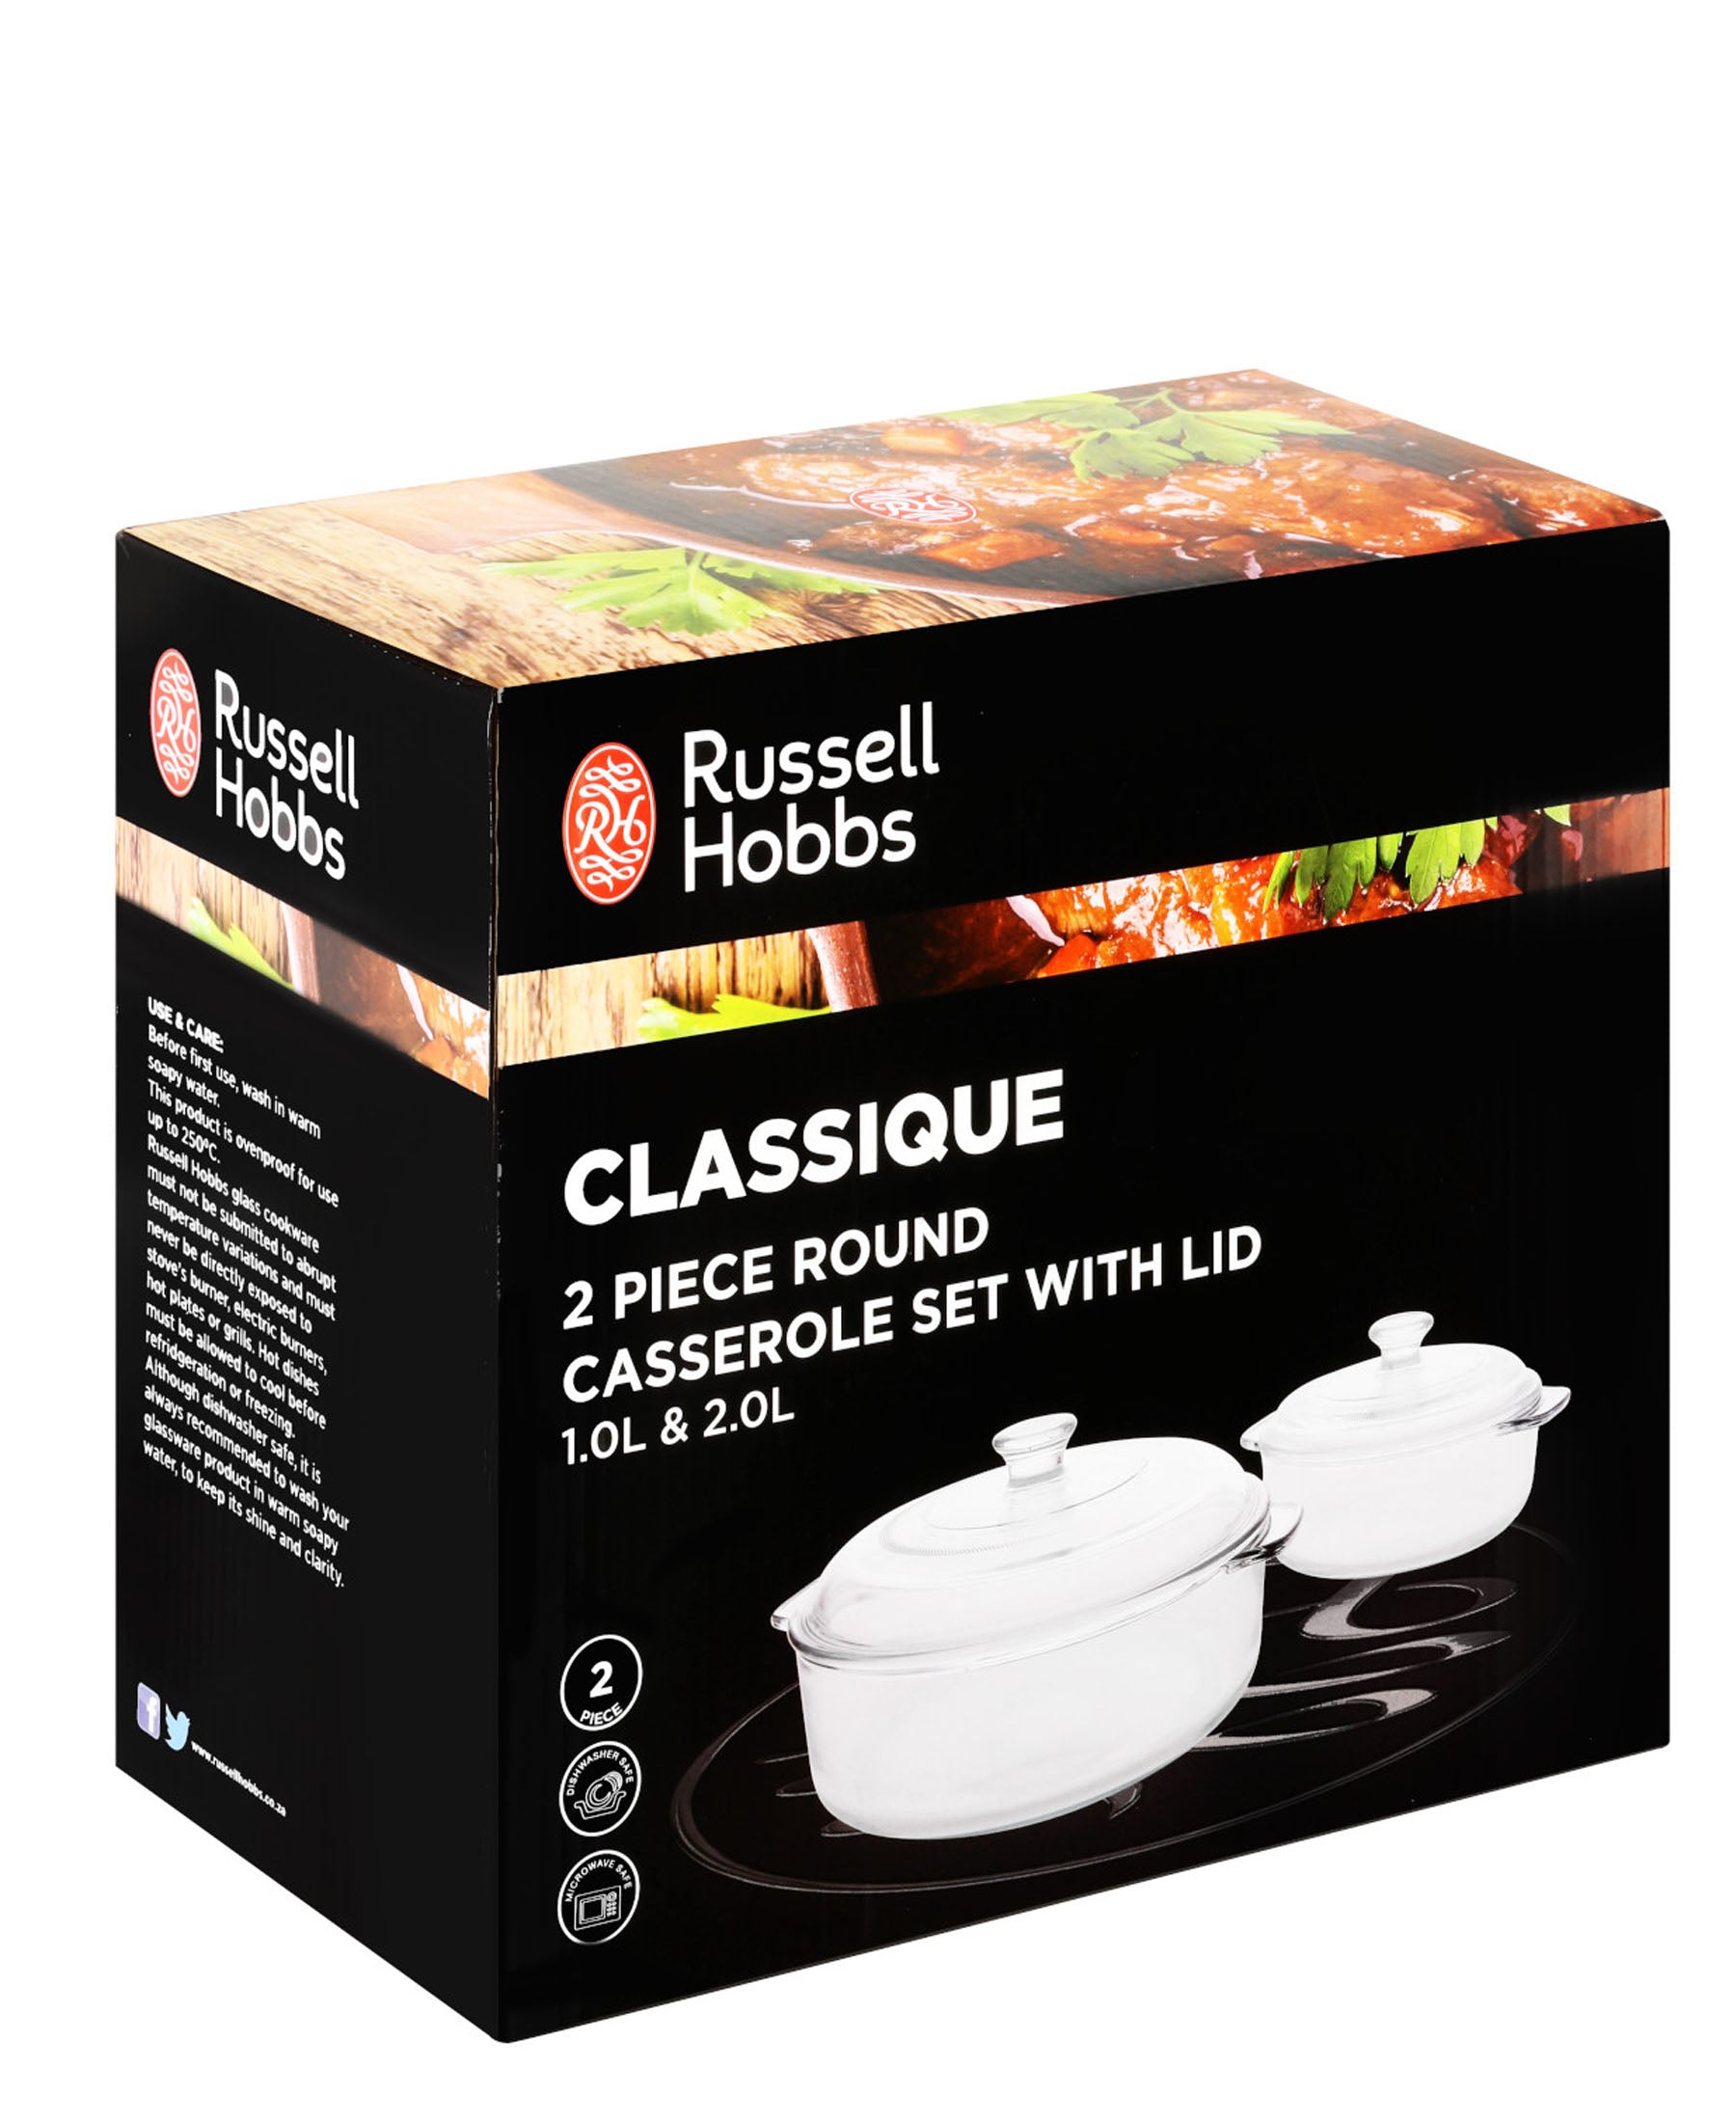 Russell Hobbs Classique 2 Piece Round Casserole Set - Transparent